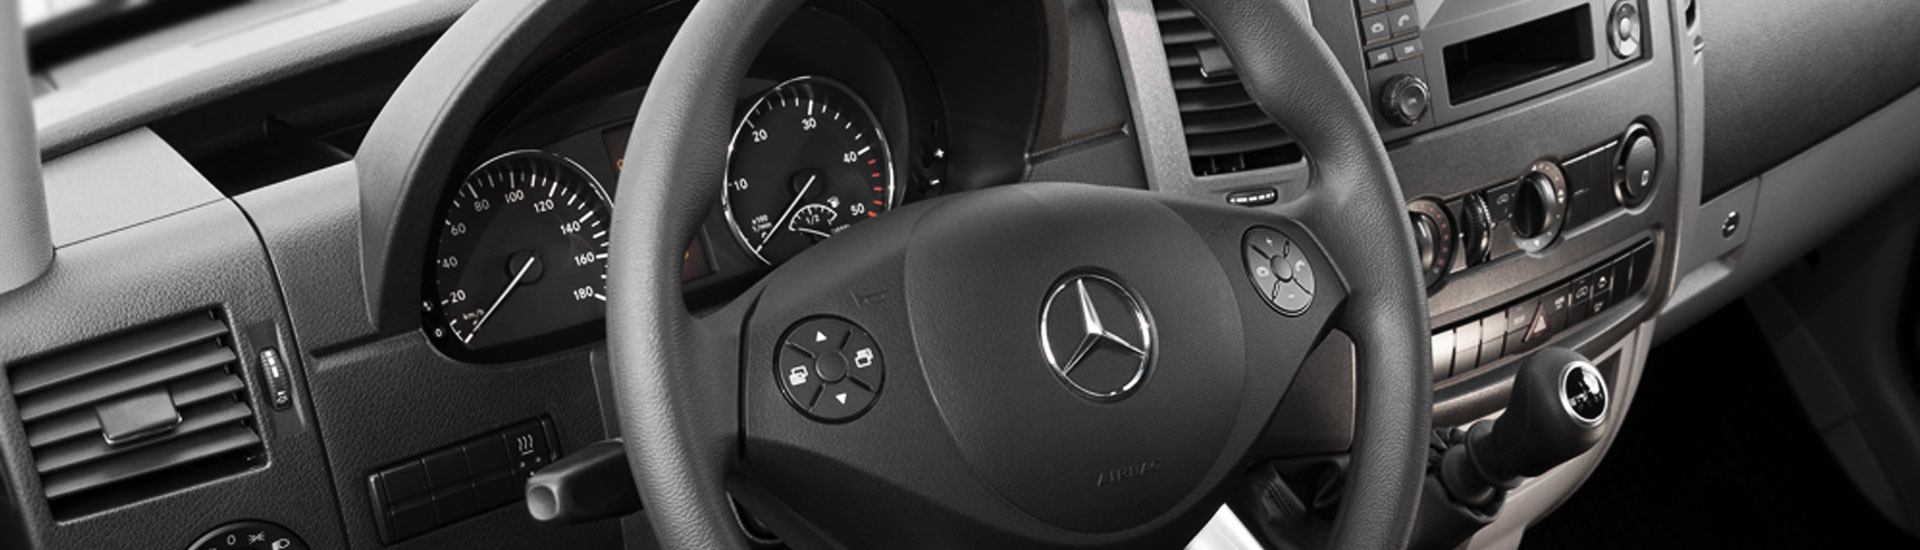 Mercedes-Benz Sprinter Custom Dash Kits